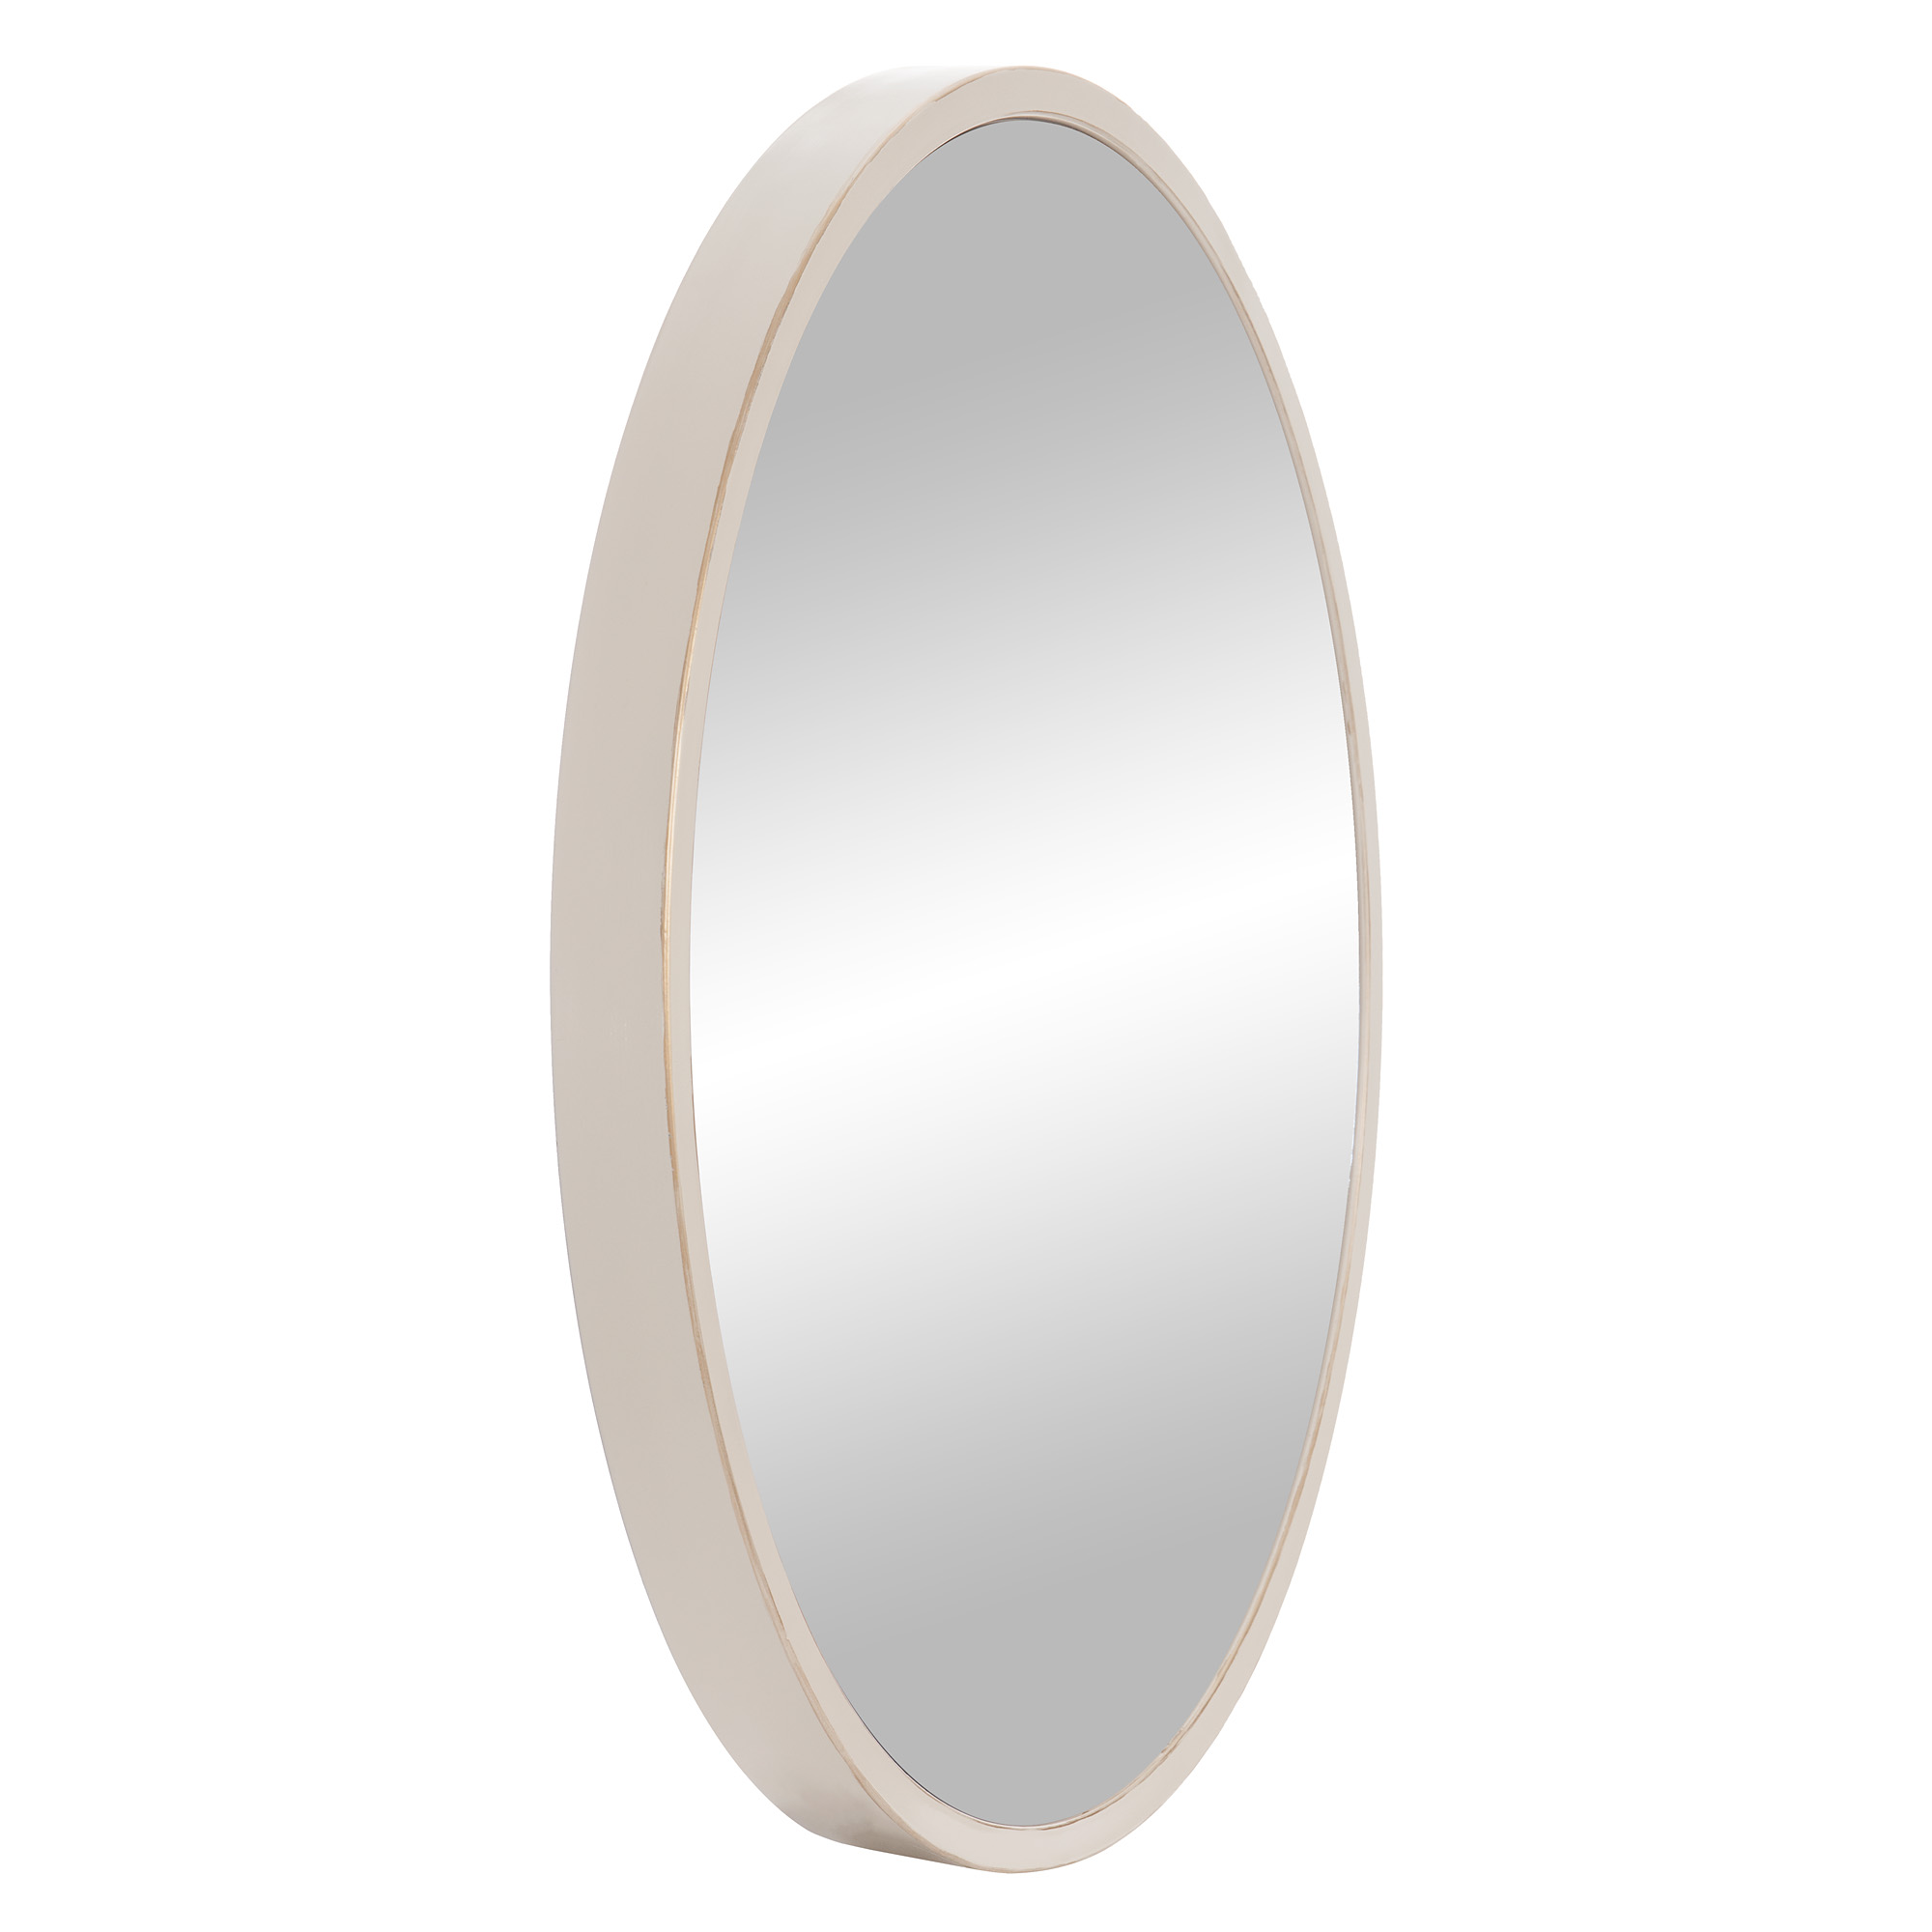 Minimalist Round Metal Frame Wall Mount Mirror, Distressed Cream & Gold, 30" x 30" - image 2 of 5